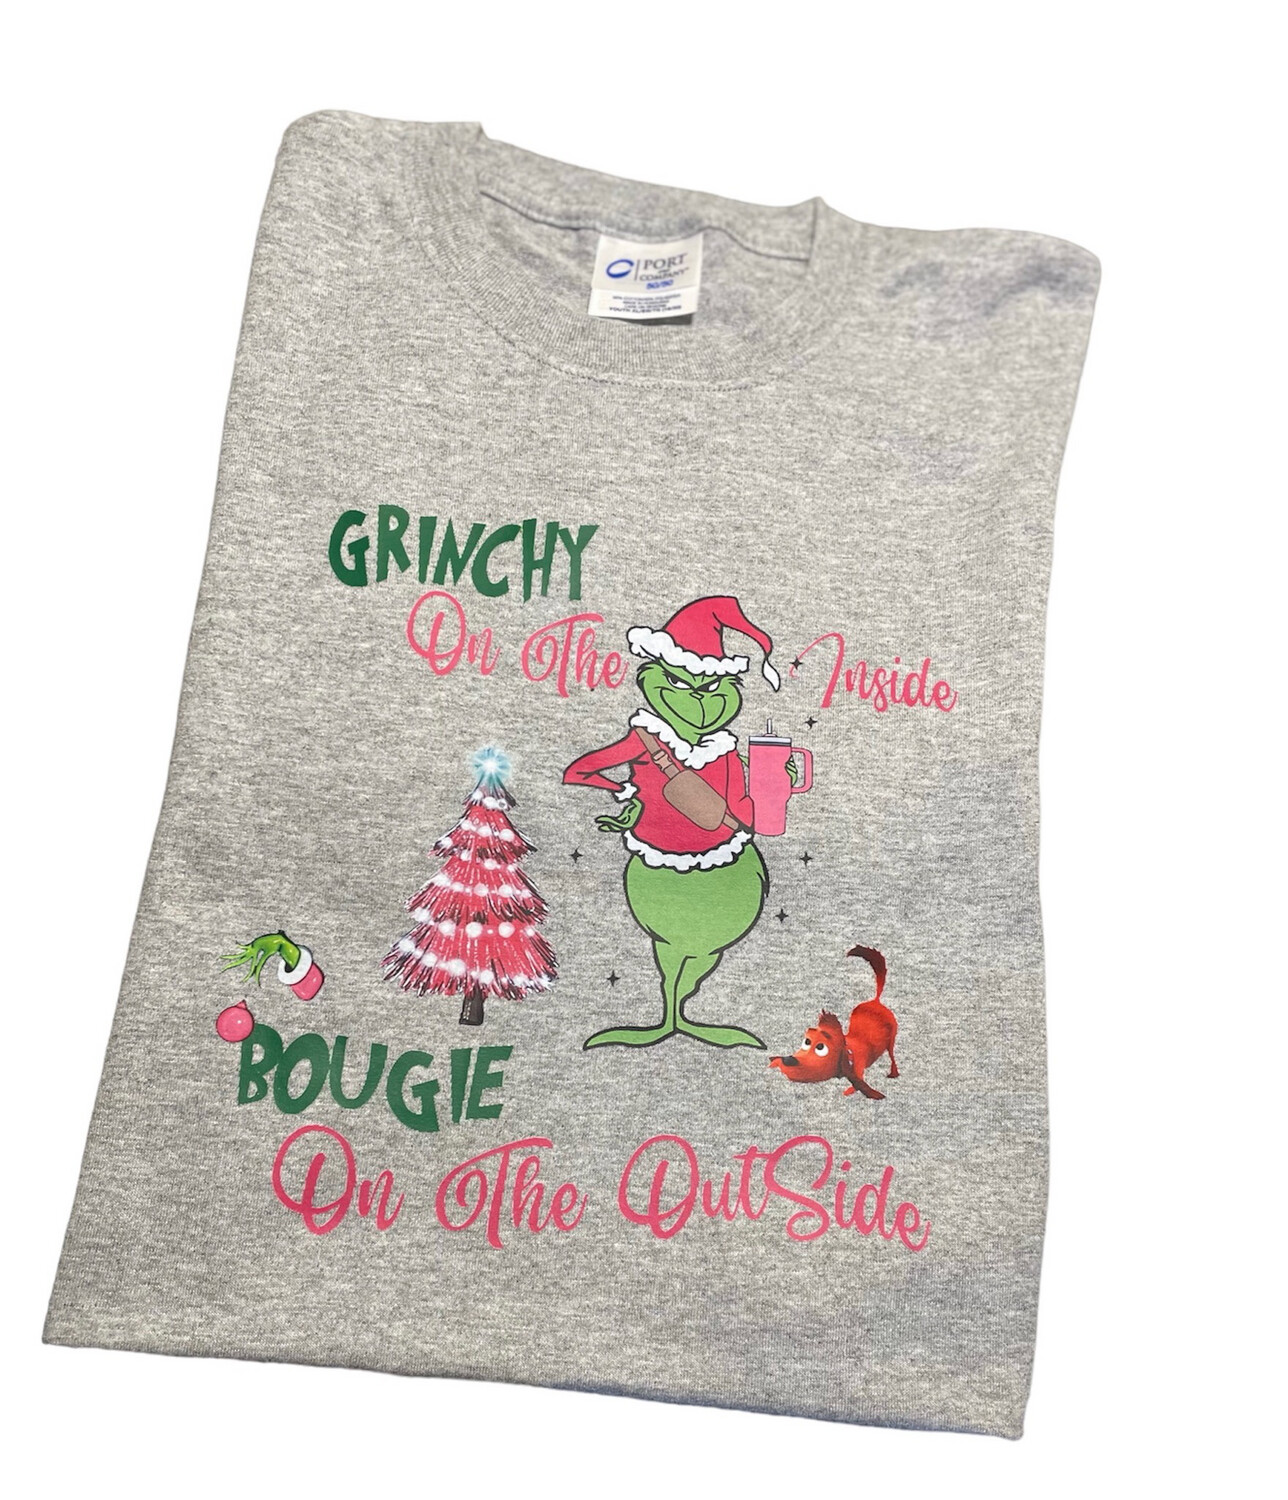 Bougie Grinch Shirt